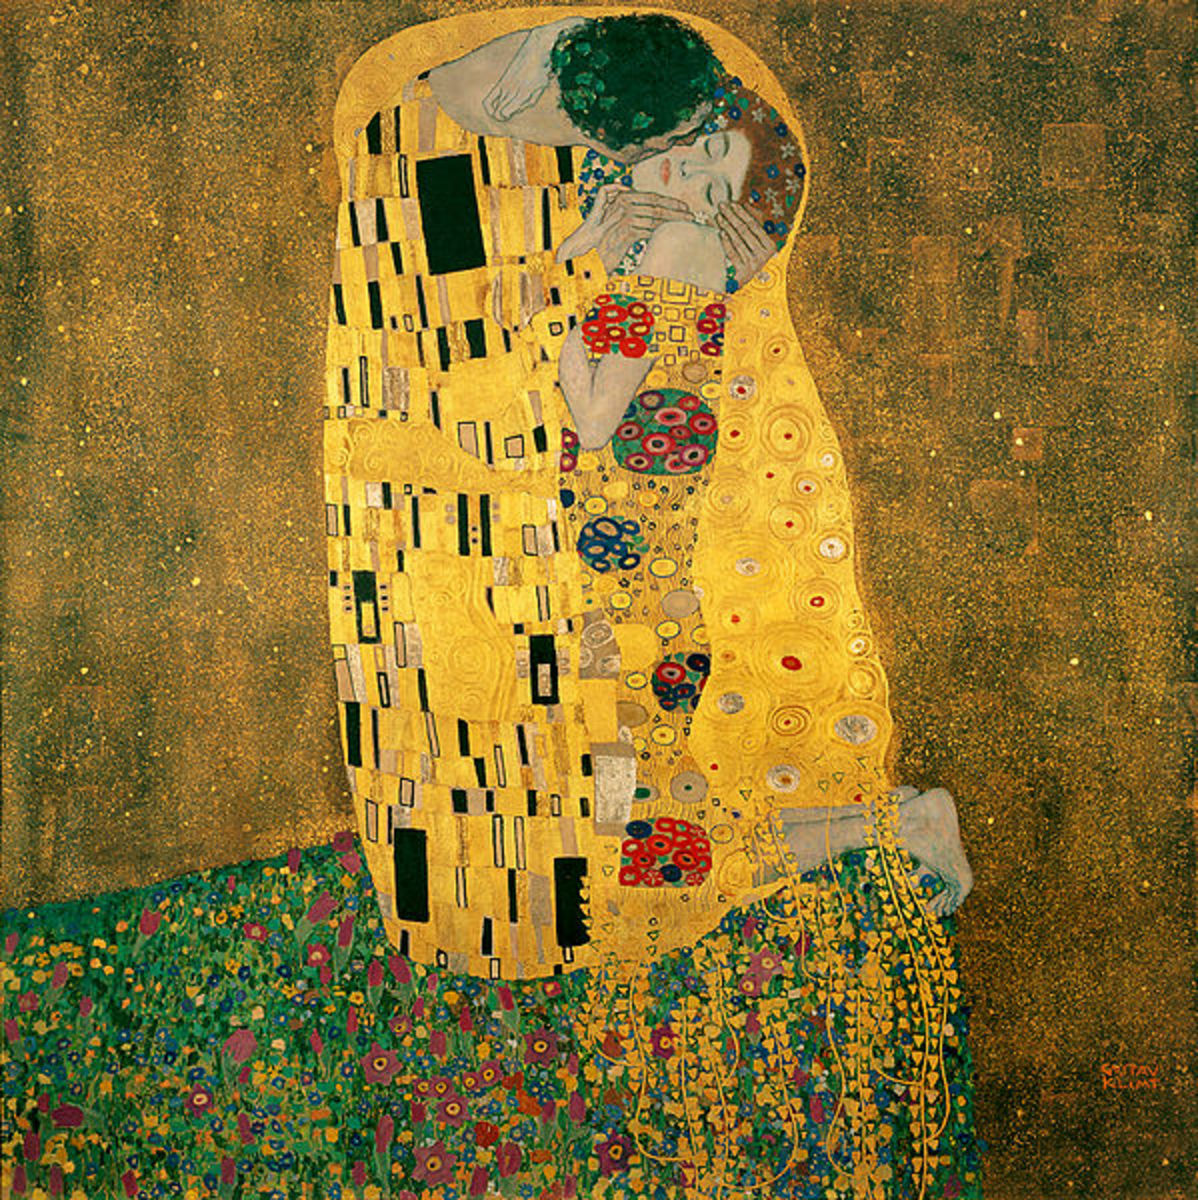 Gustav Klimt's "The Kiss" (1908)